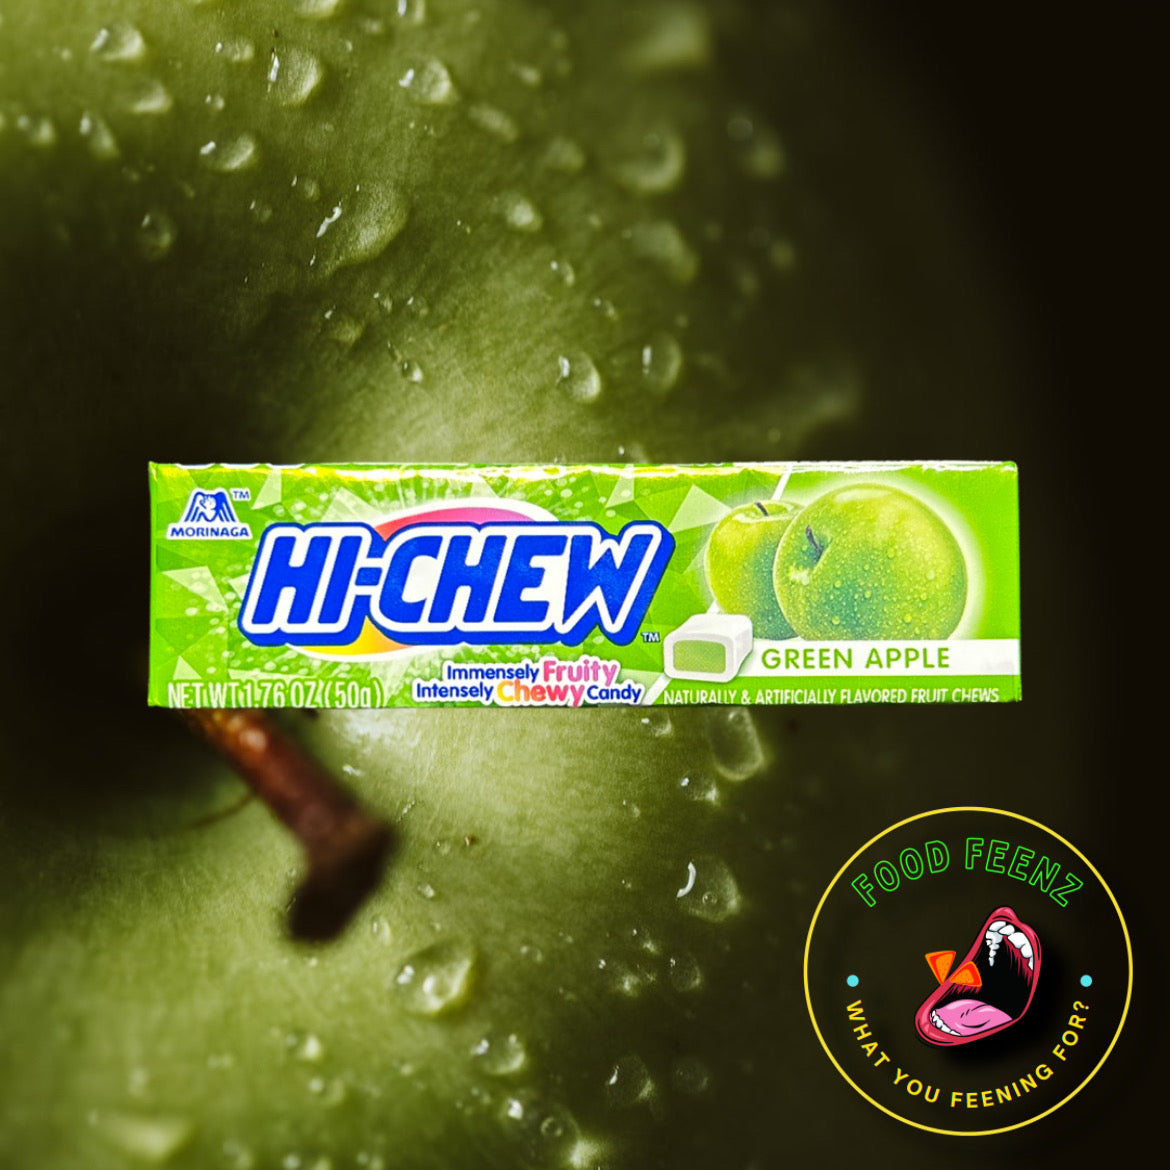 HI-CHEW Green Apple Flavor (Taiwan)